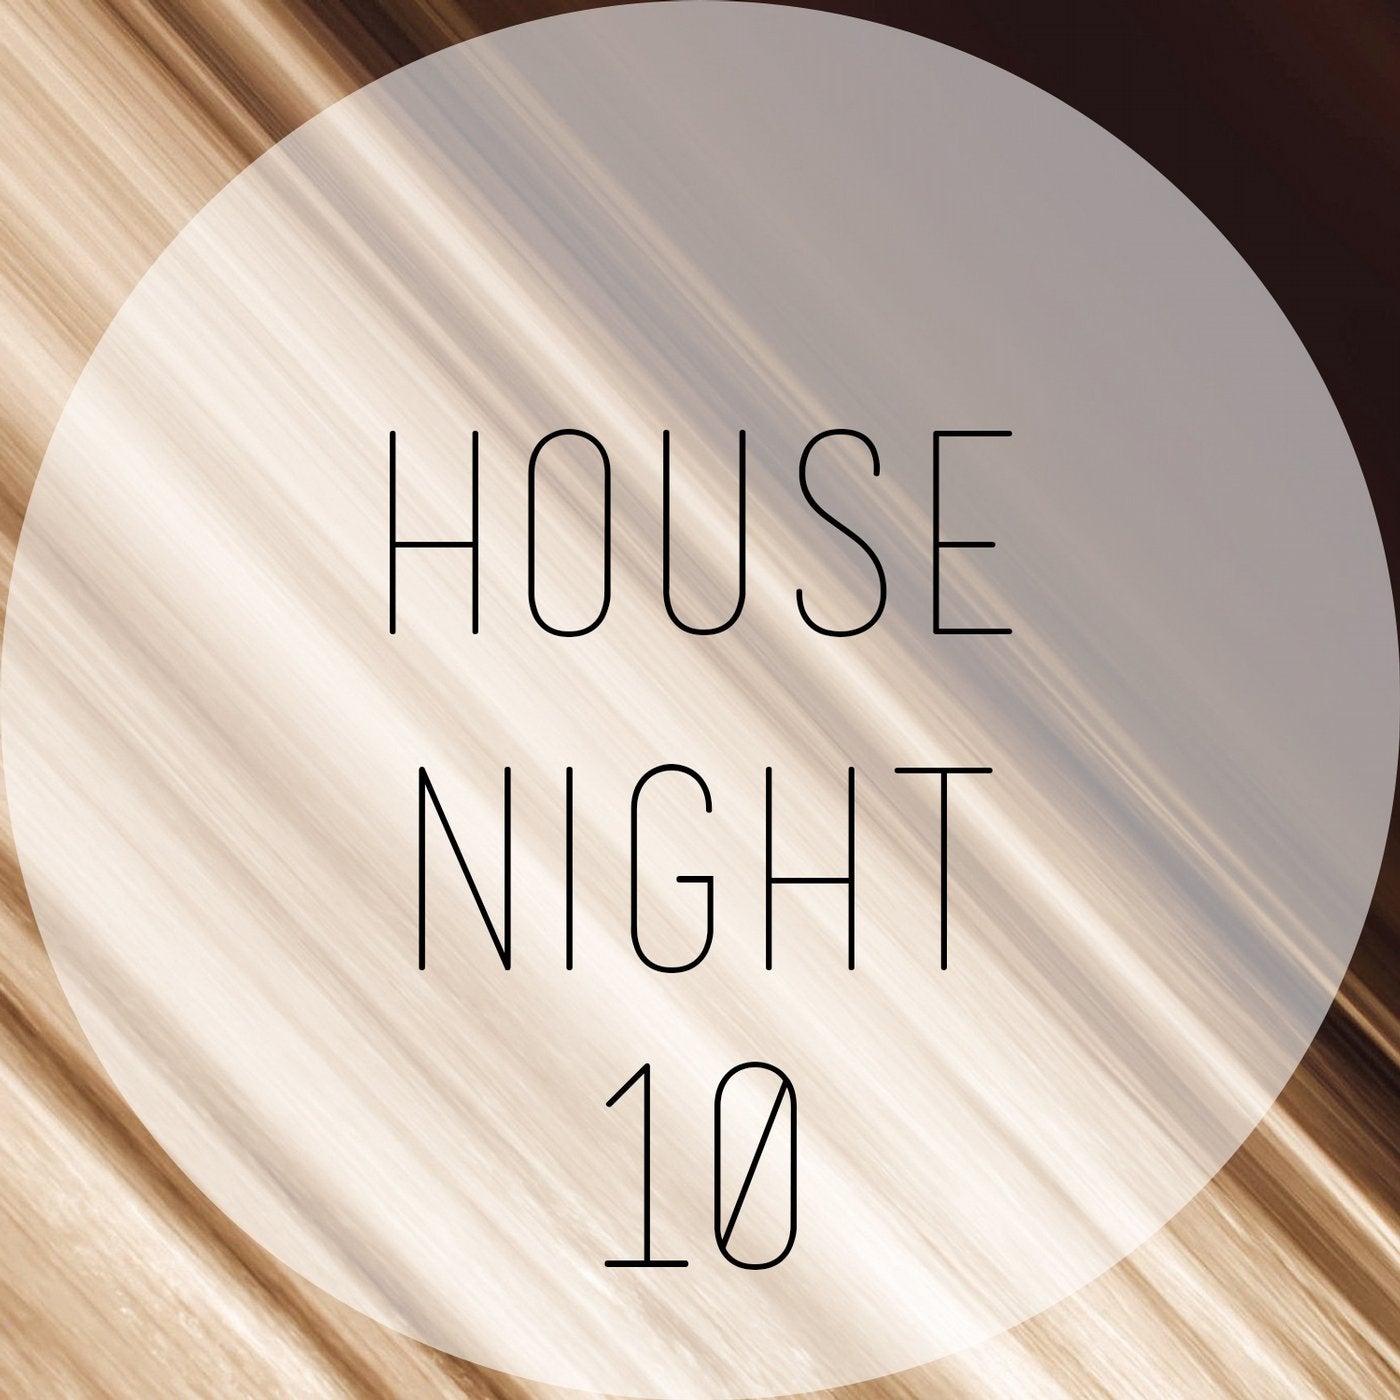 House Night, Vol. 10